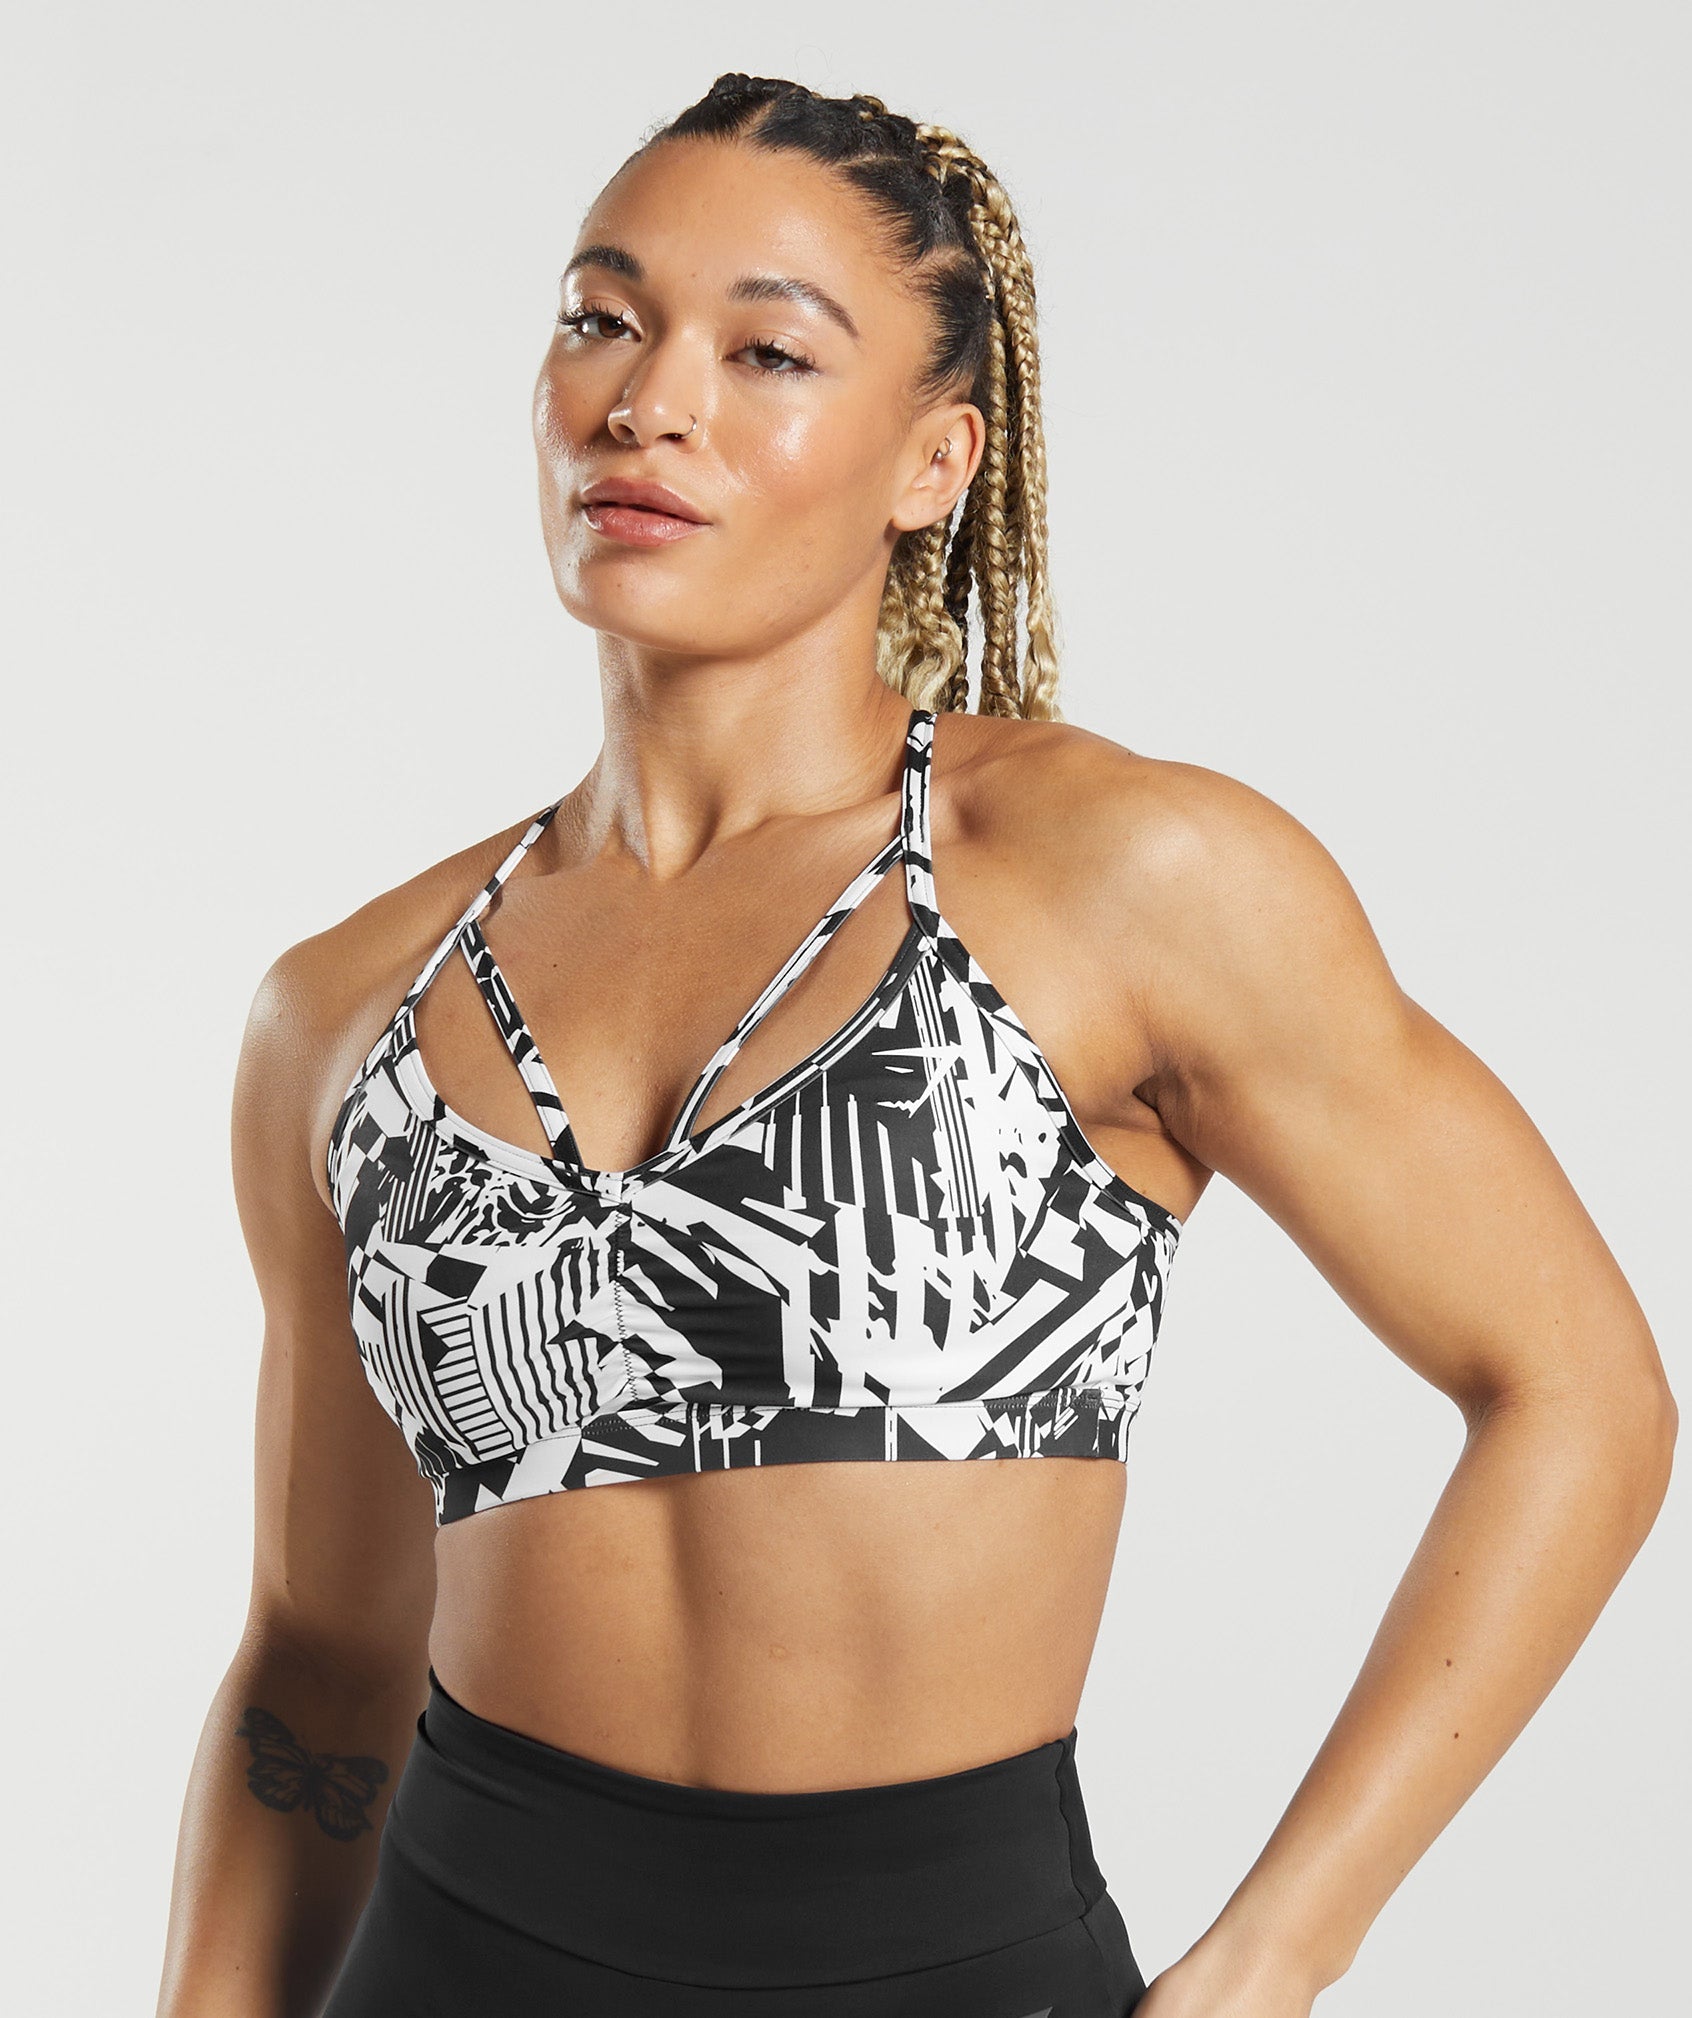 Sports bra (Gray, Black) from Stronger